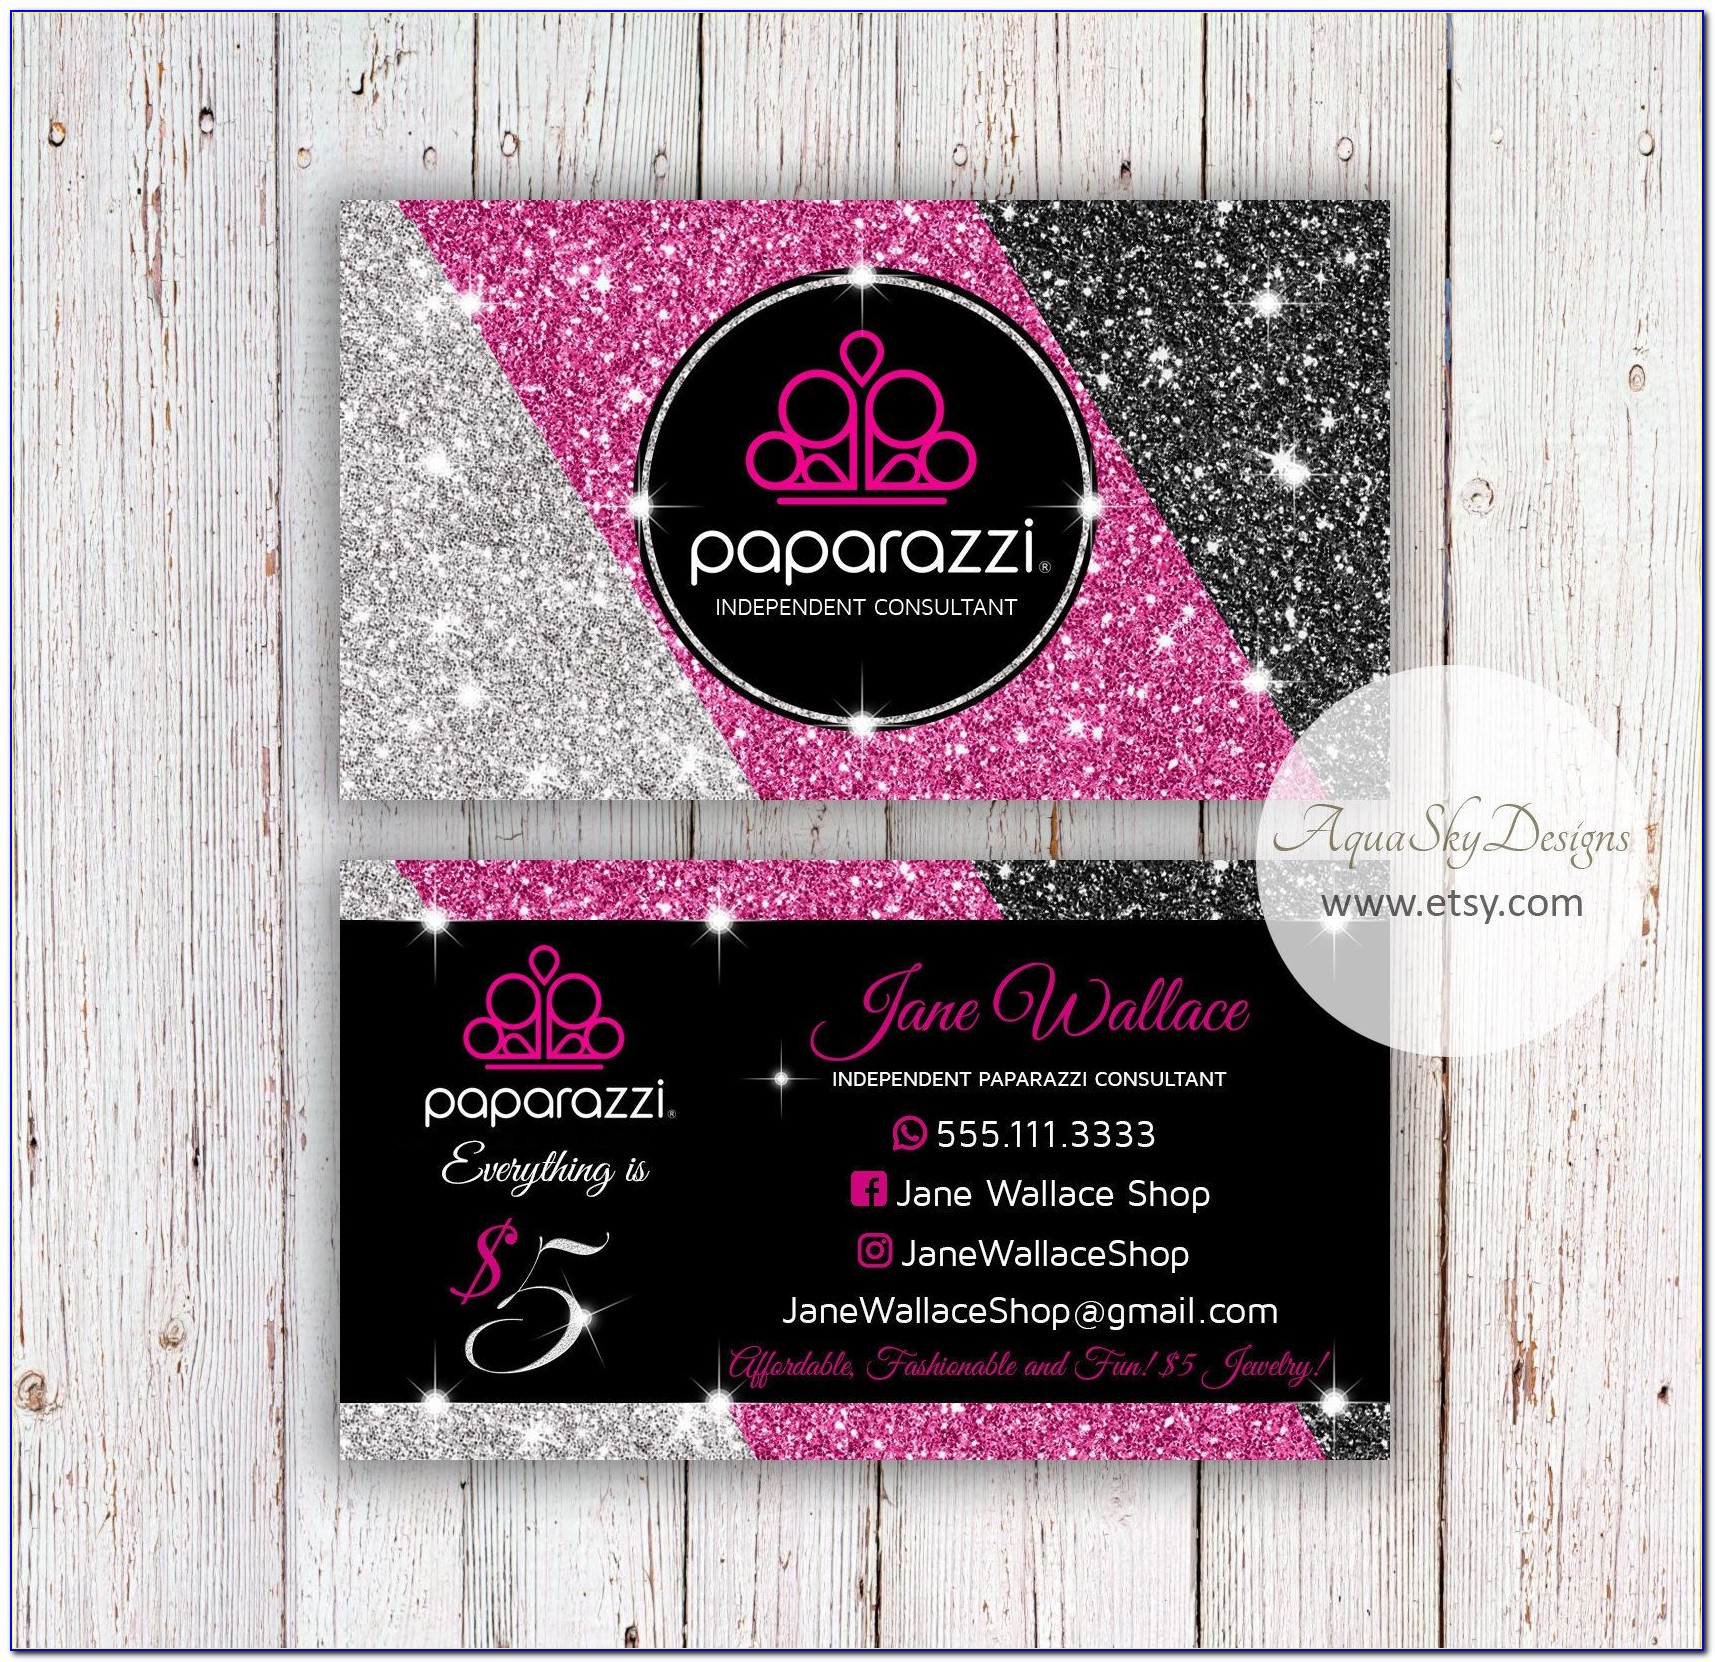 Paparazzi Business Card Designs